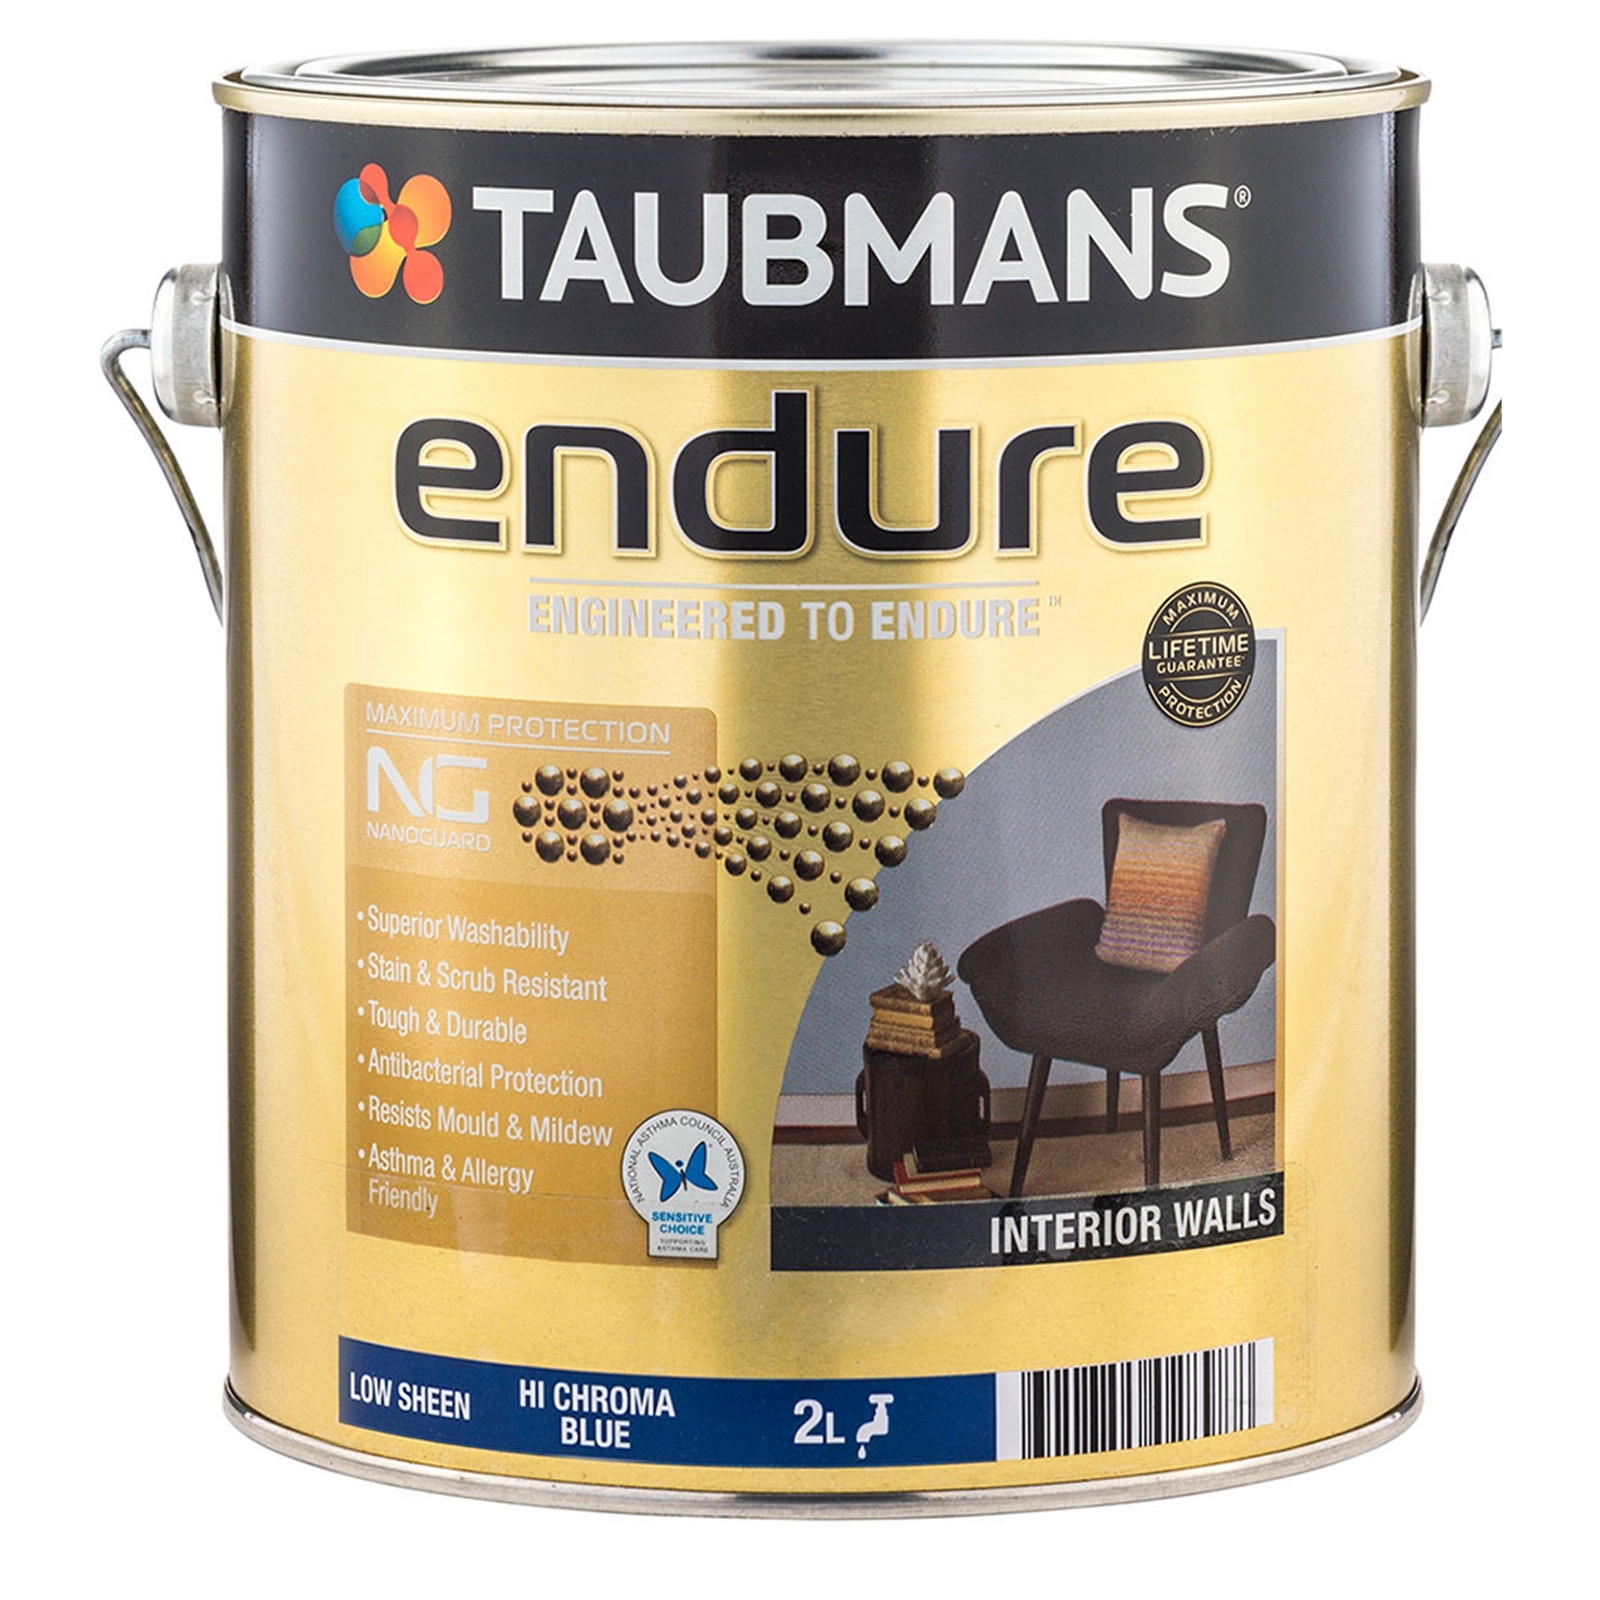 Taubmans Endure 2L Hi Chroma Blue Low Sheen Interior Walls